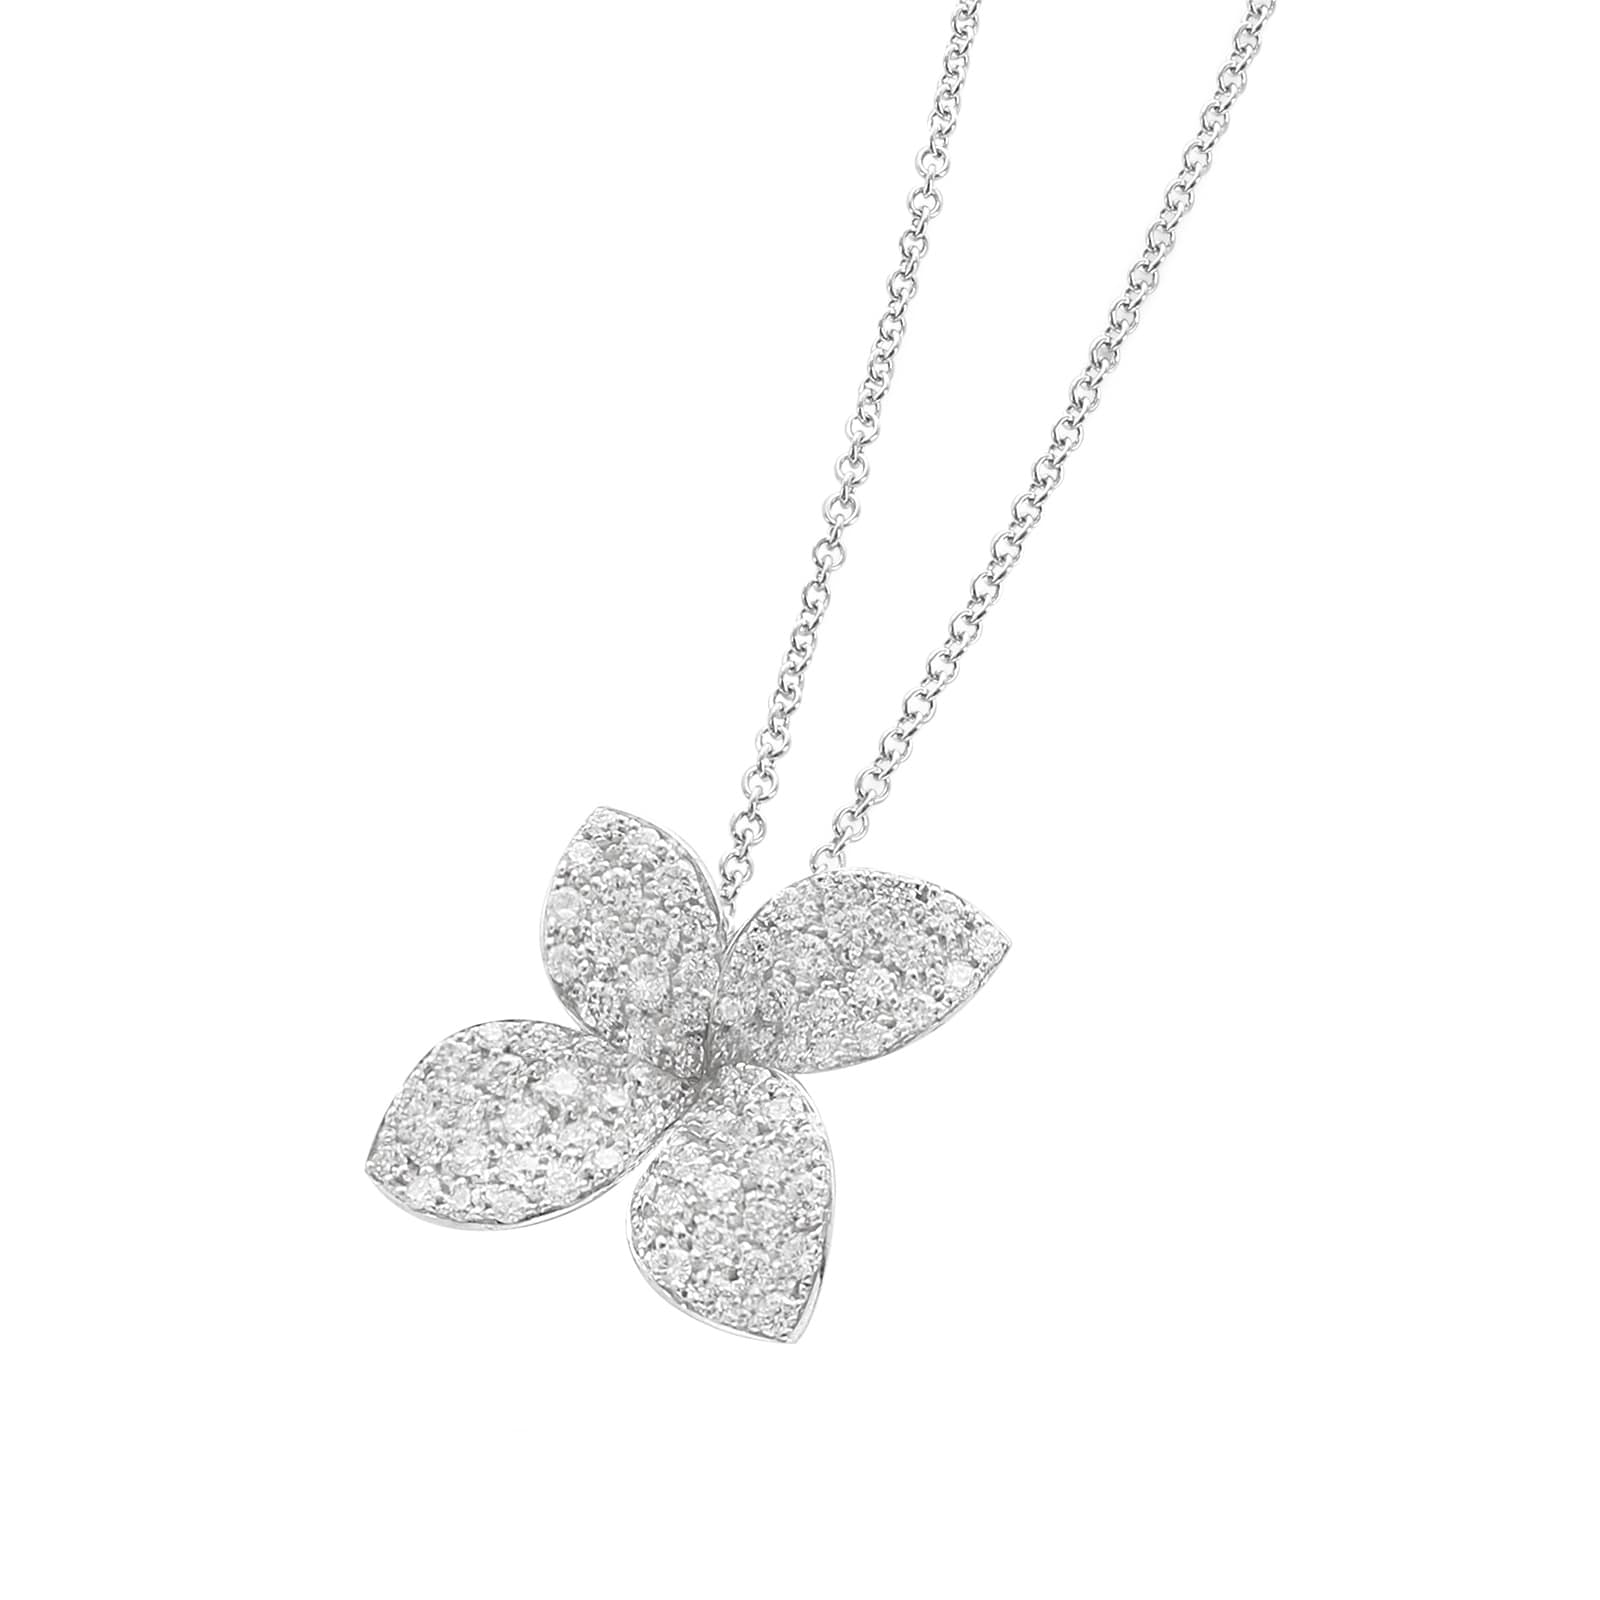 Petit Garden Medium Flower Necklace in 18ct White Gold with Diamonds